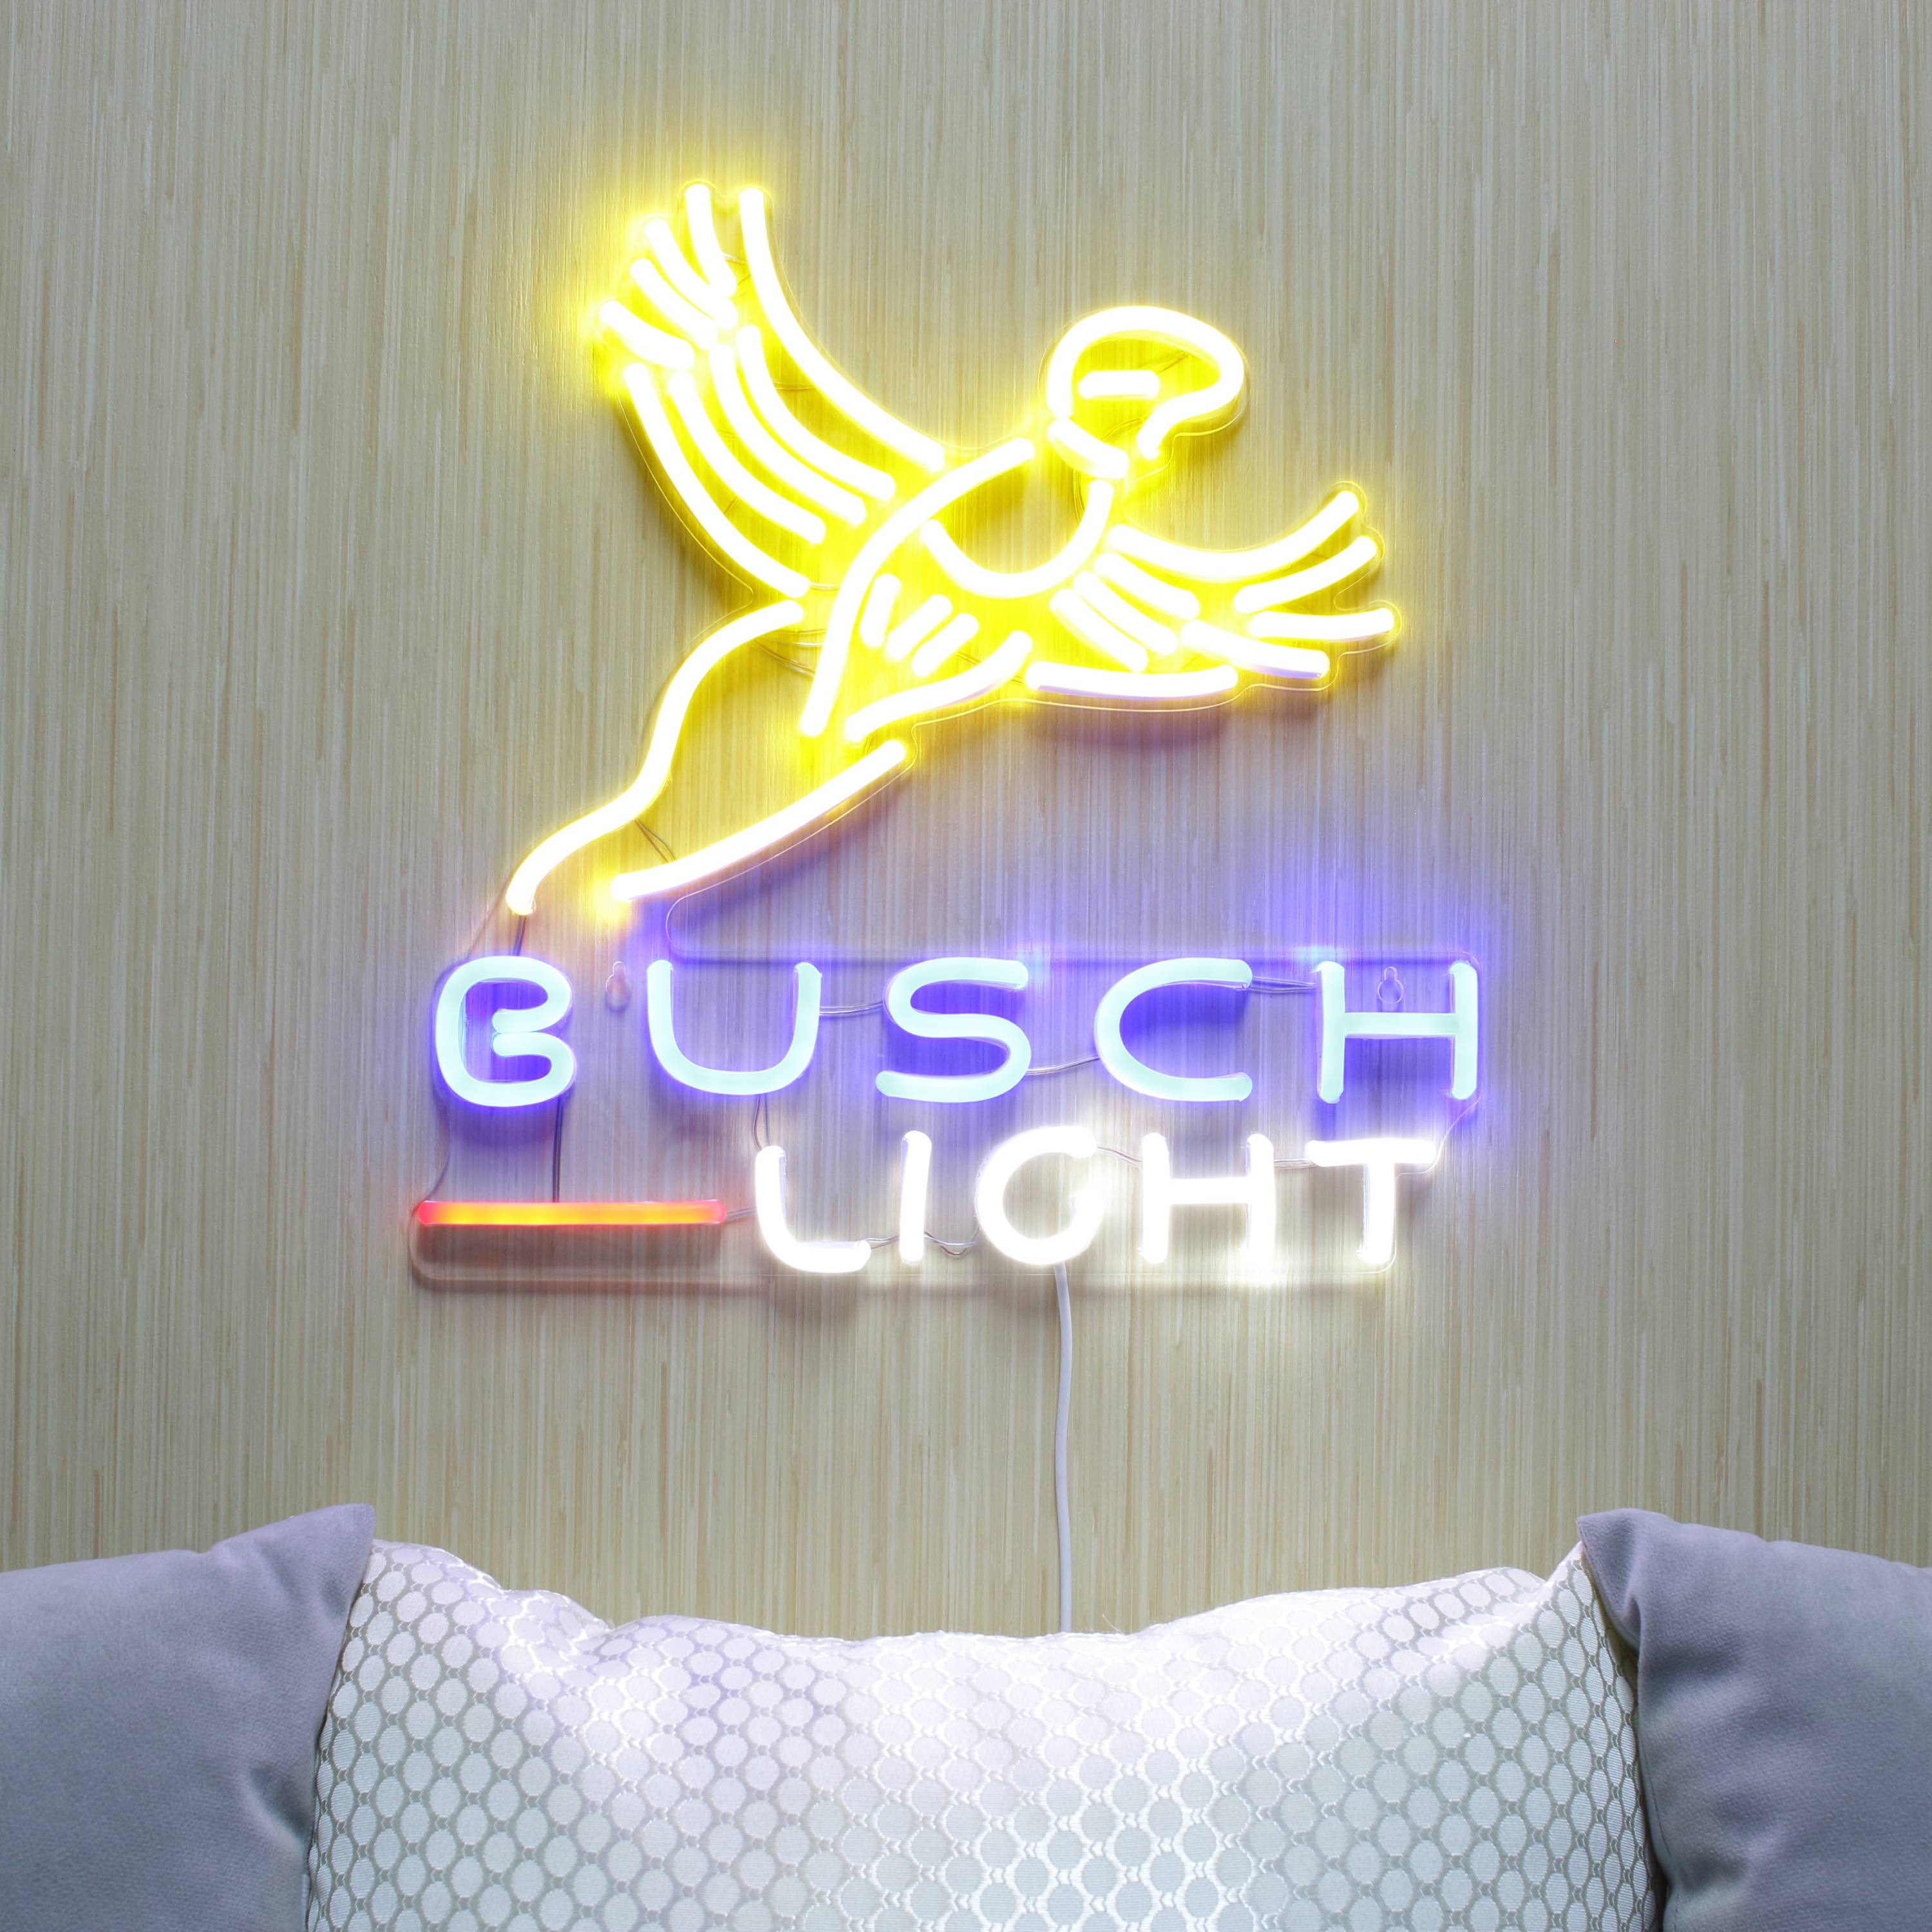 Busch Light with Bird Large Flex Neon LED Sign